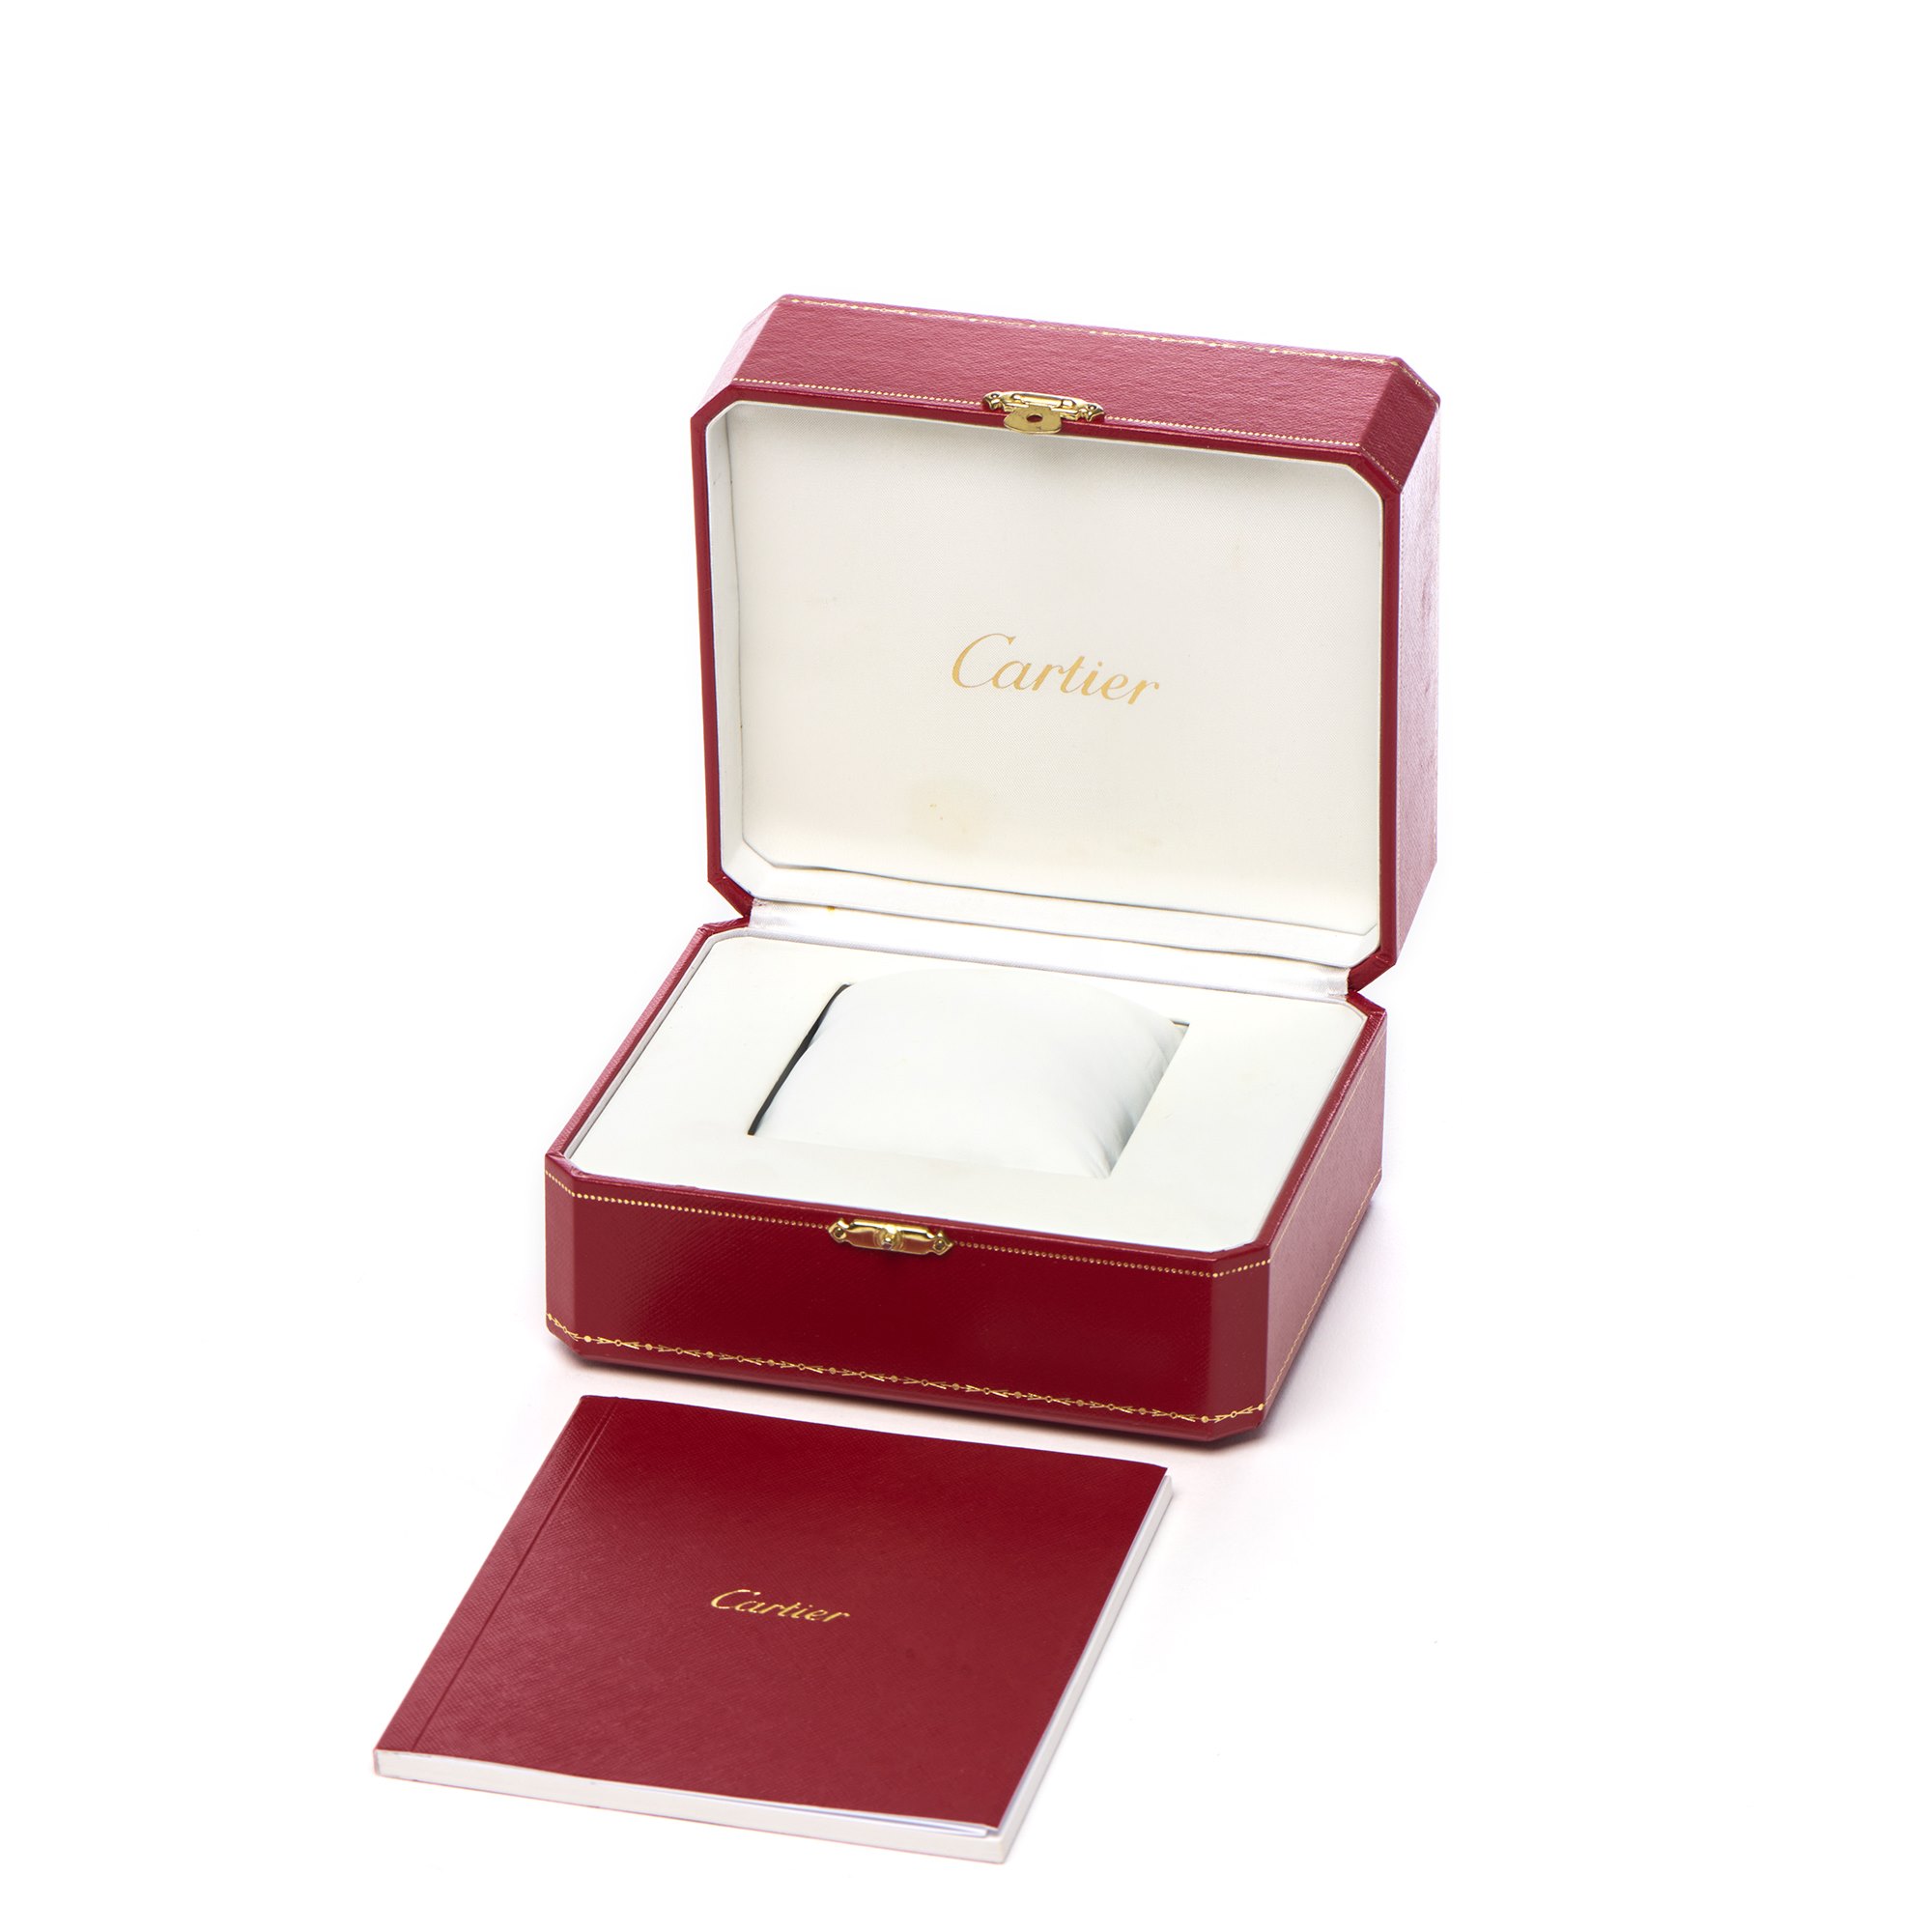 Cartier Tortue Monopoussoir 18K White Gold W1580038 or 2762